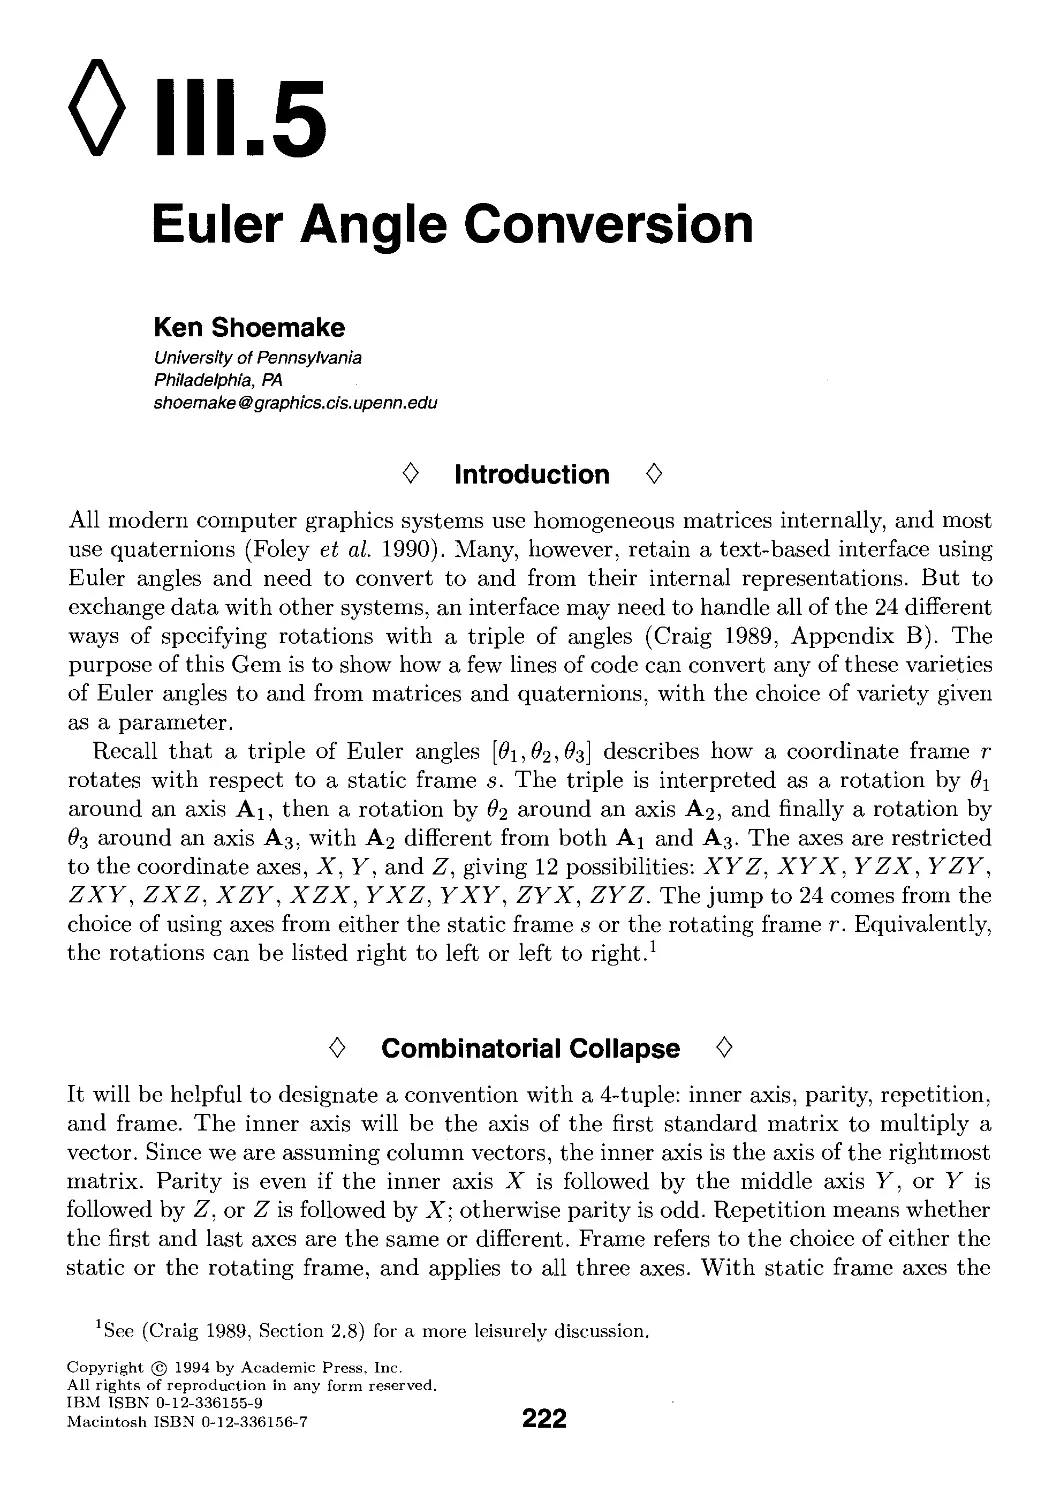 III.5. Euler Angle Conversion by Ken Shoemake